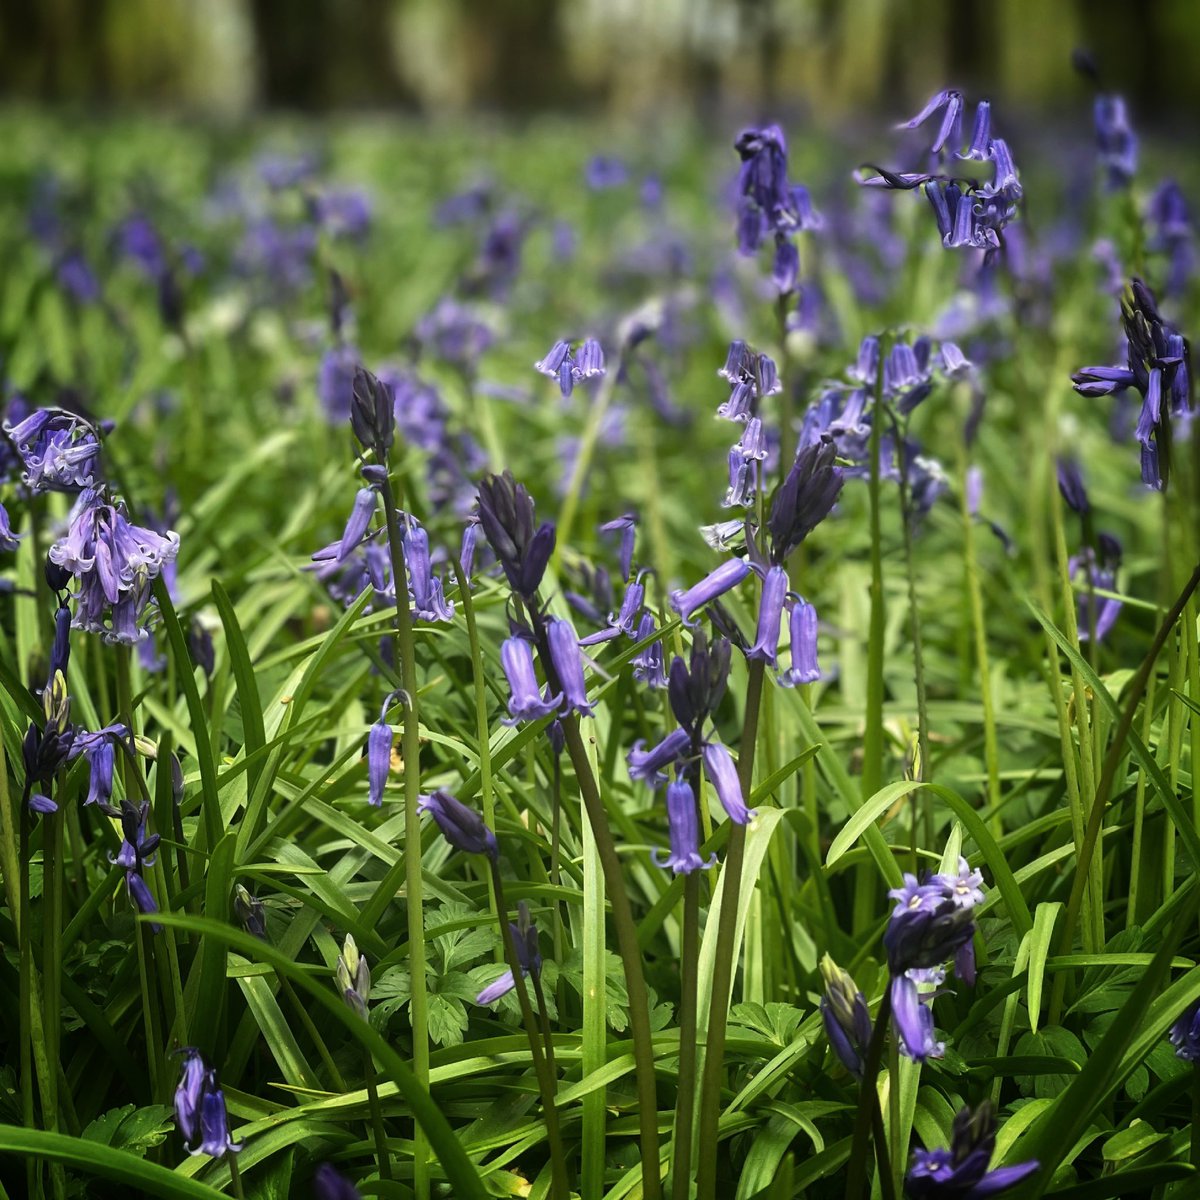 Ah sweet Bluebells 😌
Lovely walk through the woodland @bluebellwalk 

#arlington 
#bluebells #eastsussex #ruralsussex 
#eastbourne #hailsham #sussex